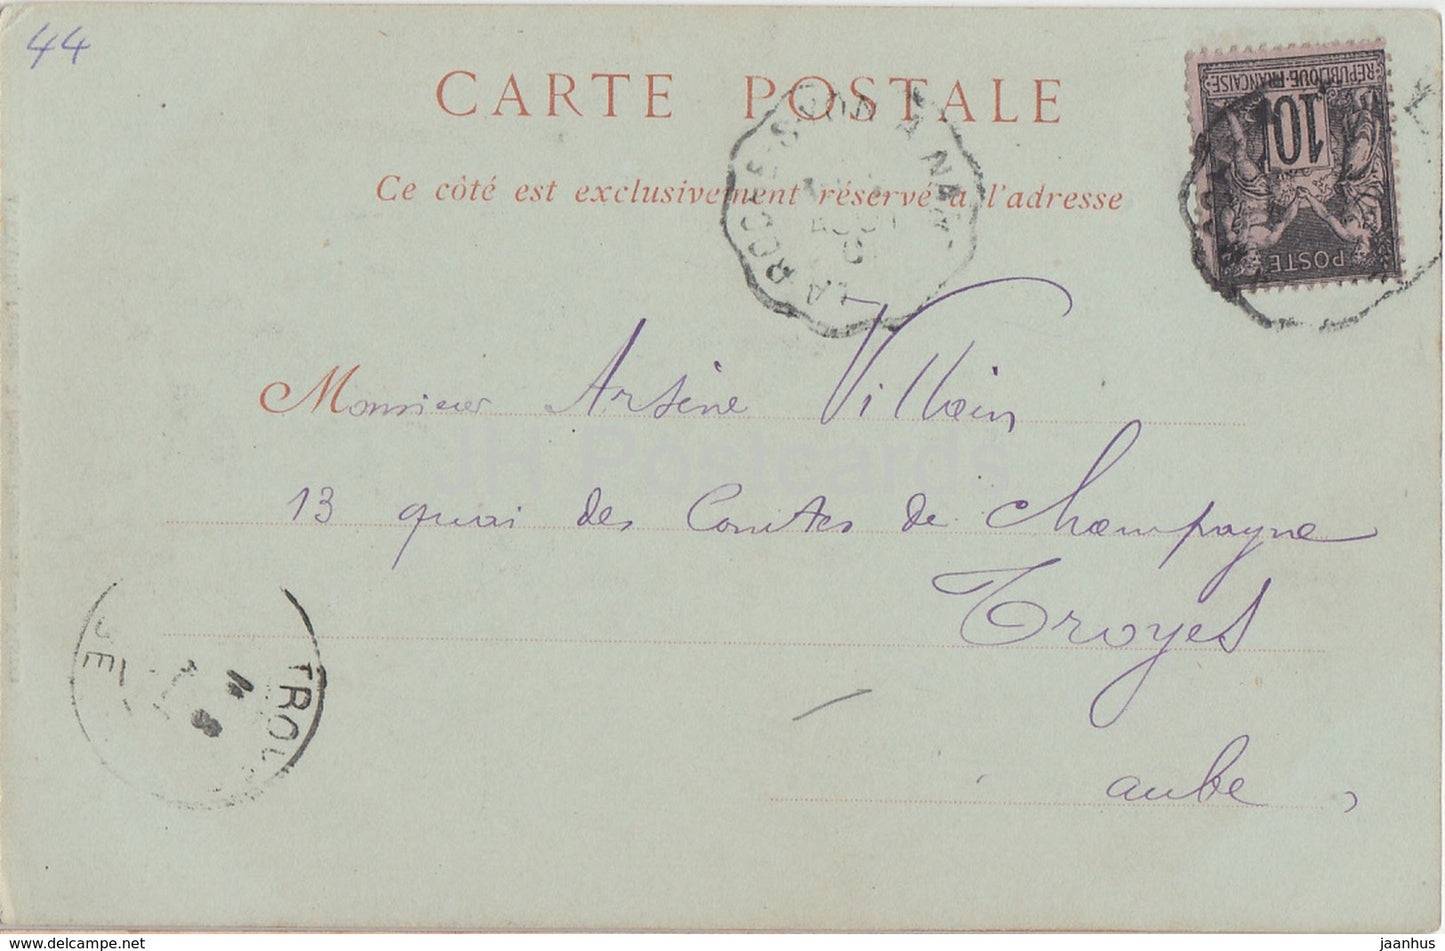 Env de Nantes - Chateau de Clisson - Schloss - 42 - alte Postkarte - 1901 - Frankreich - gebraucht